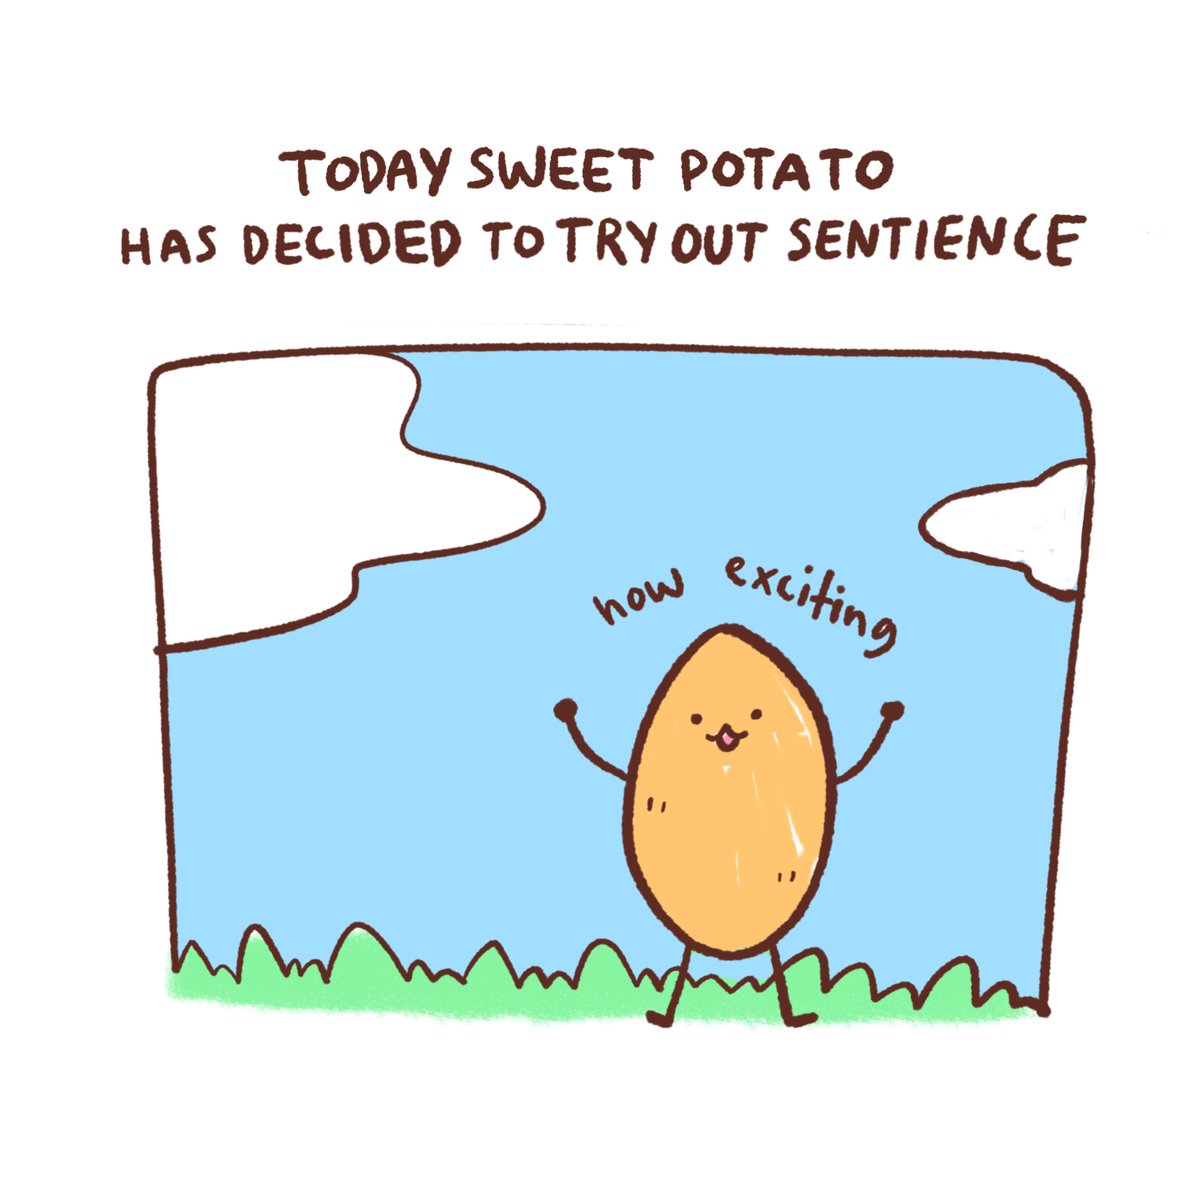 hello potato! 